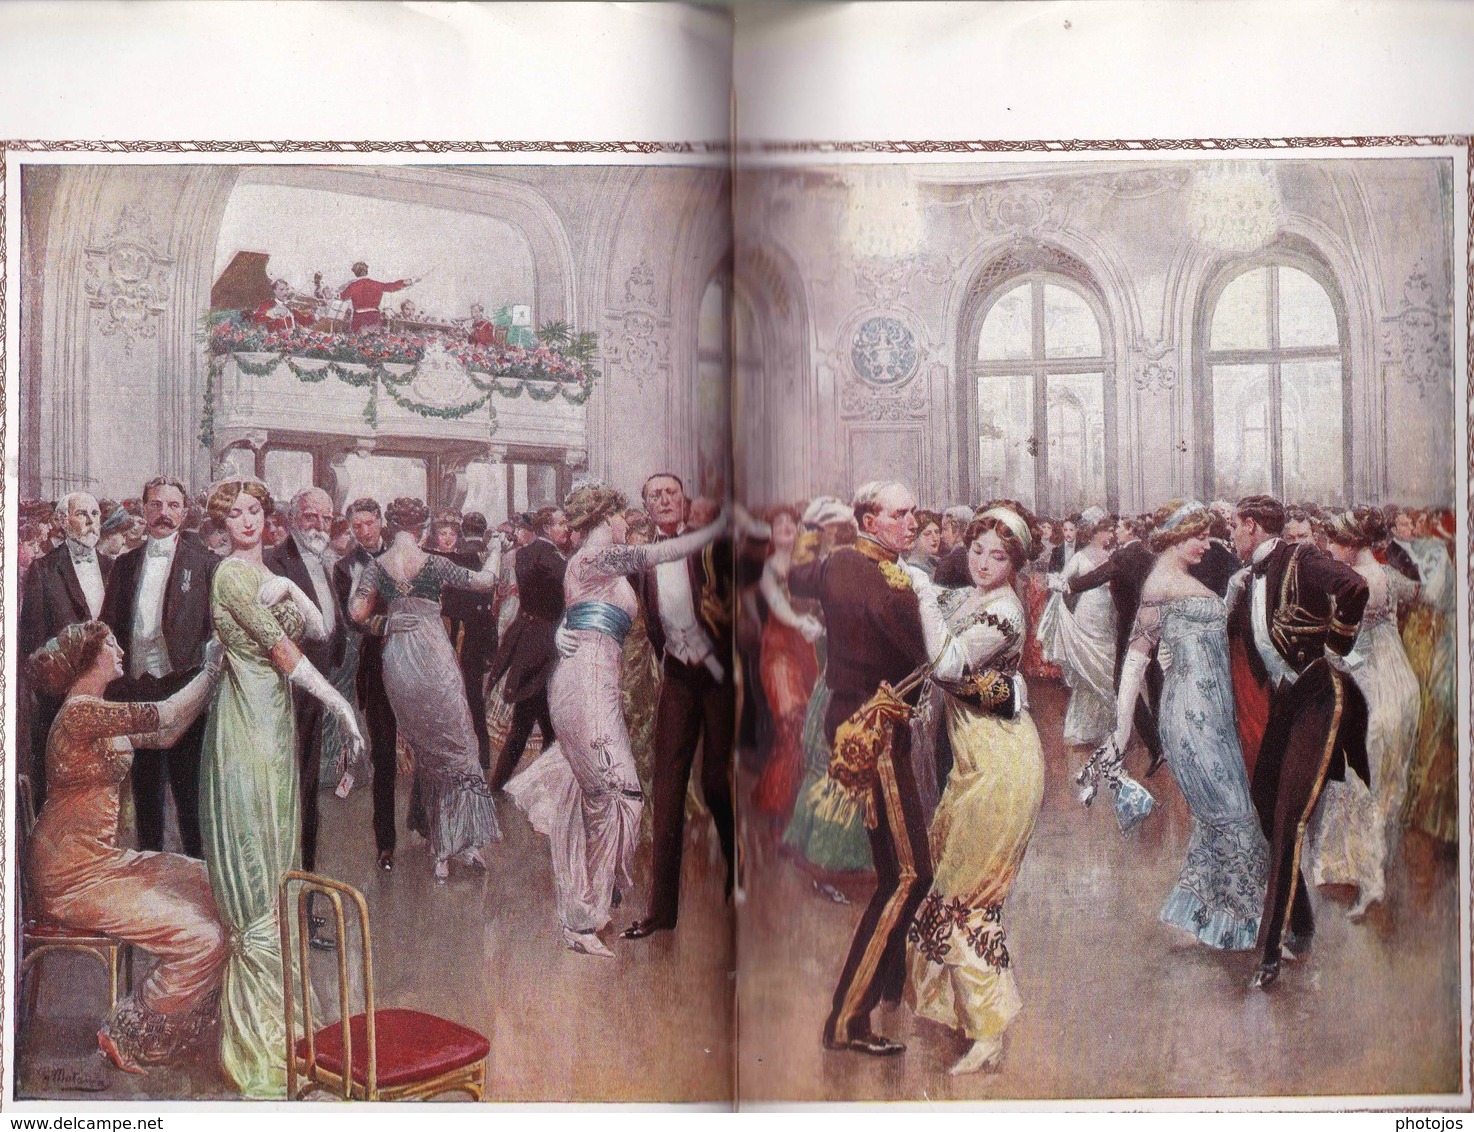 Advertising Book  "The Savoyard" : Savoy Palace, Claridge's, Berkeley, 84 P. 75 Illustrations  Schweppes - Non Classificati